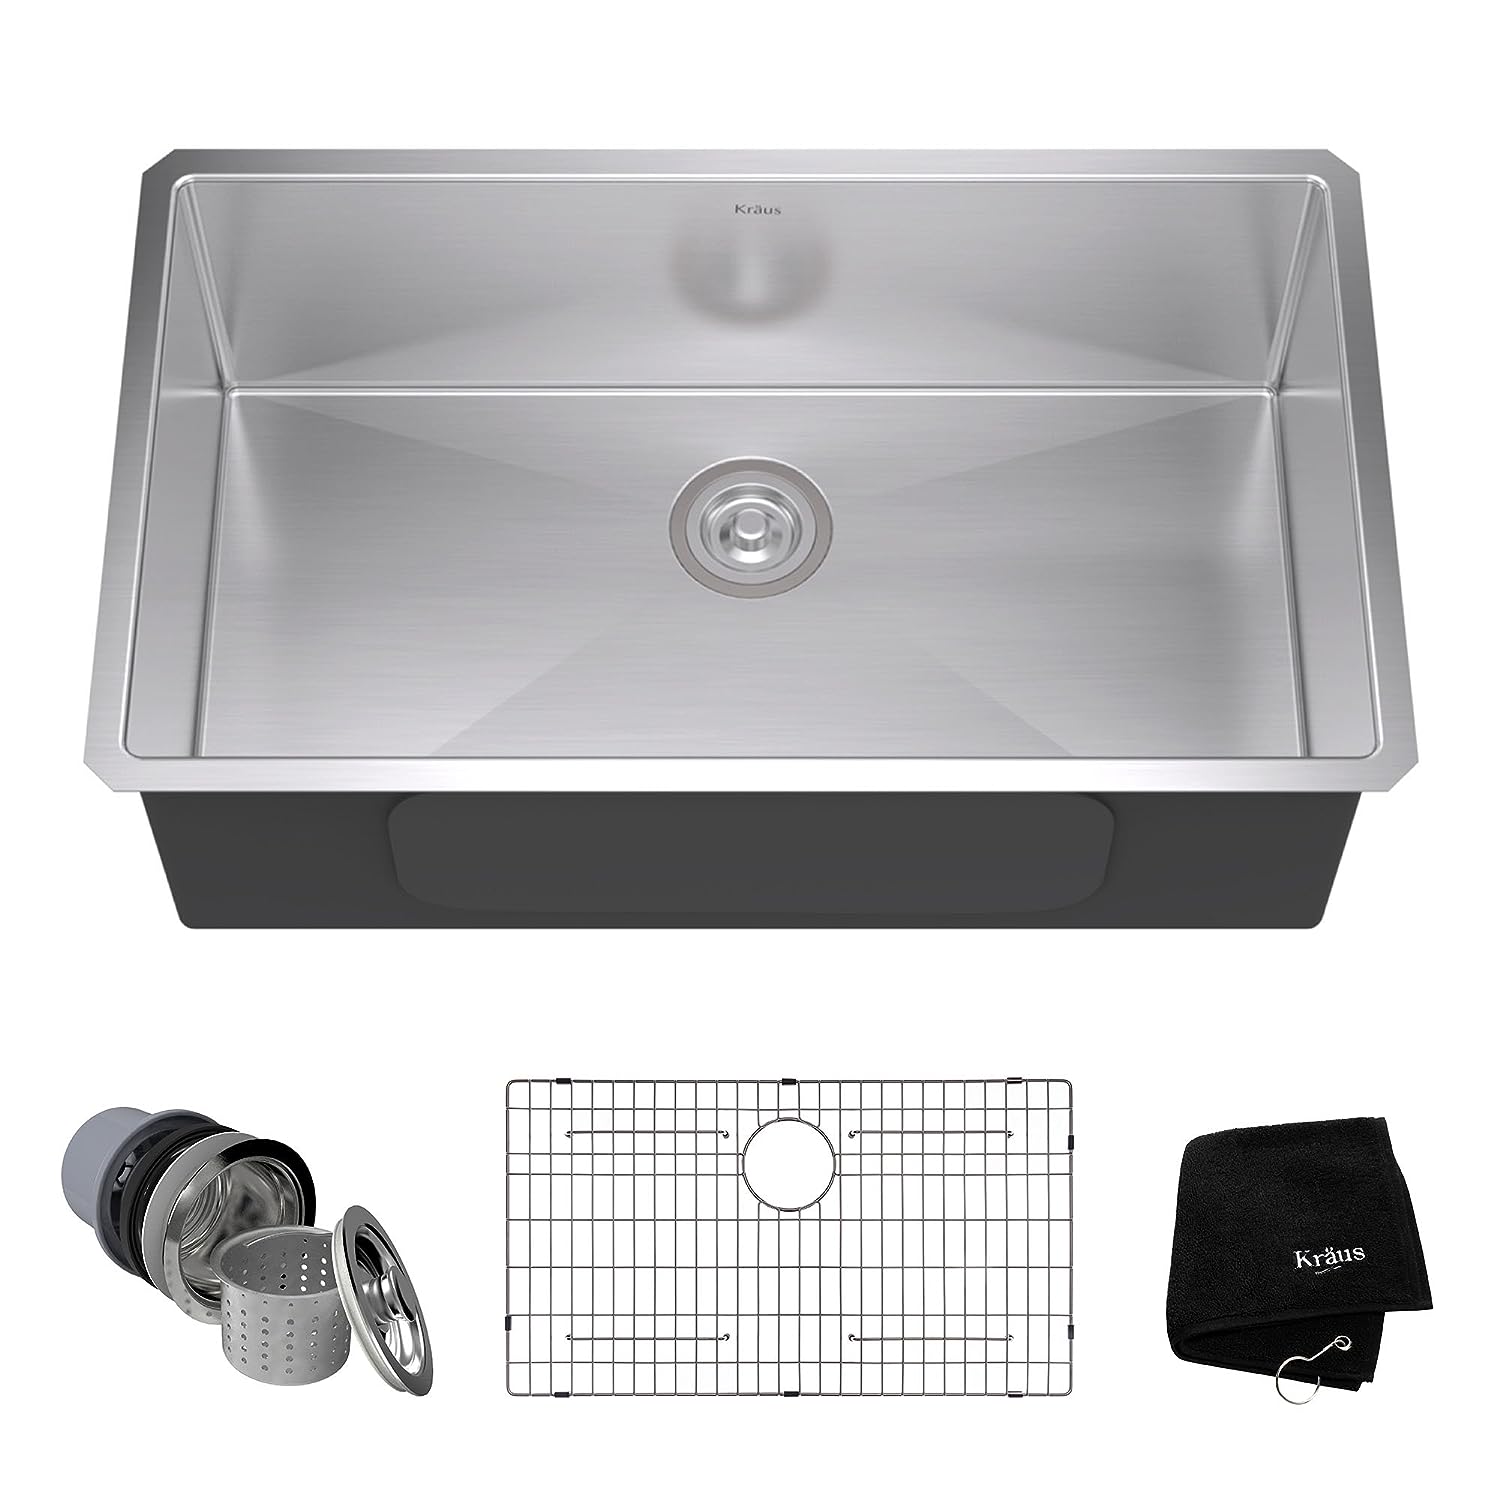 Key Factors To Consider Regarding Black Single Bowl Kitchen Sink Purchase